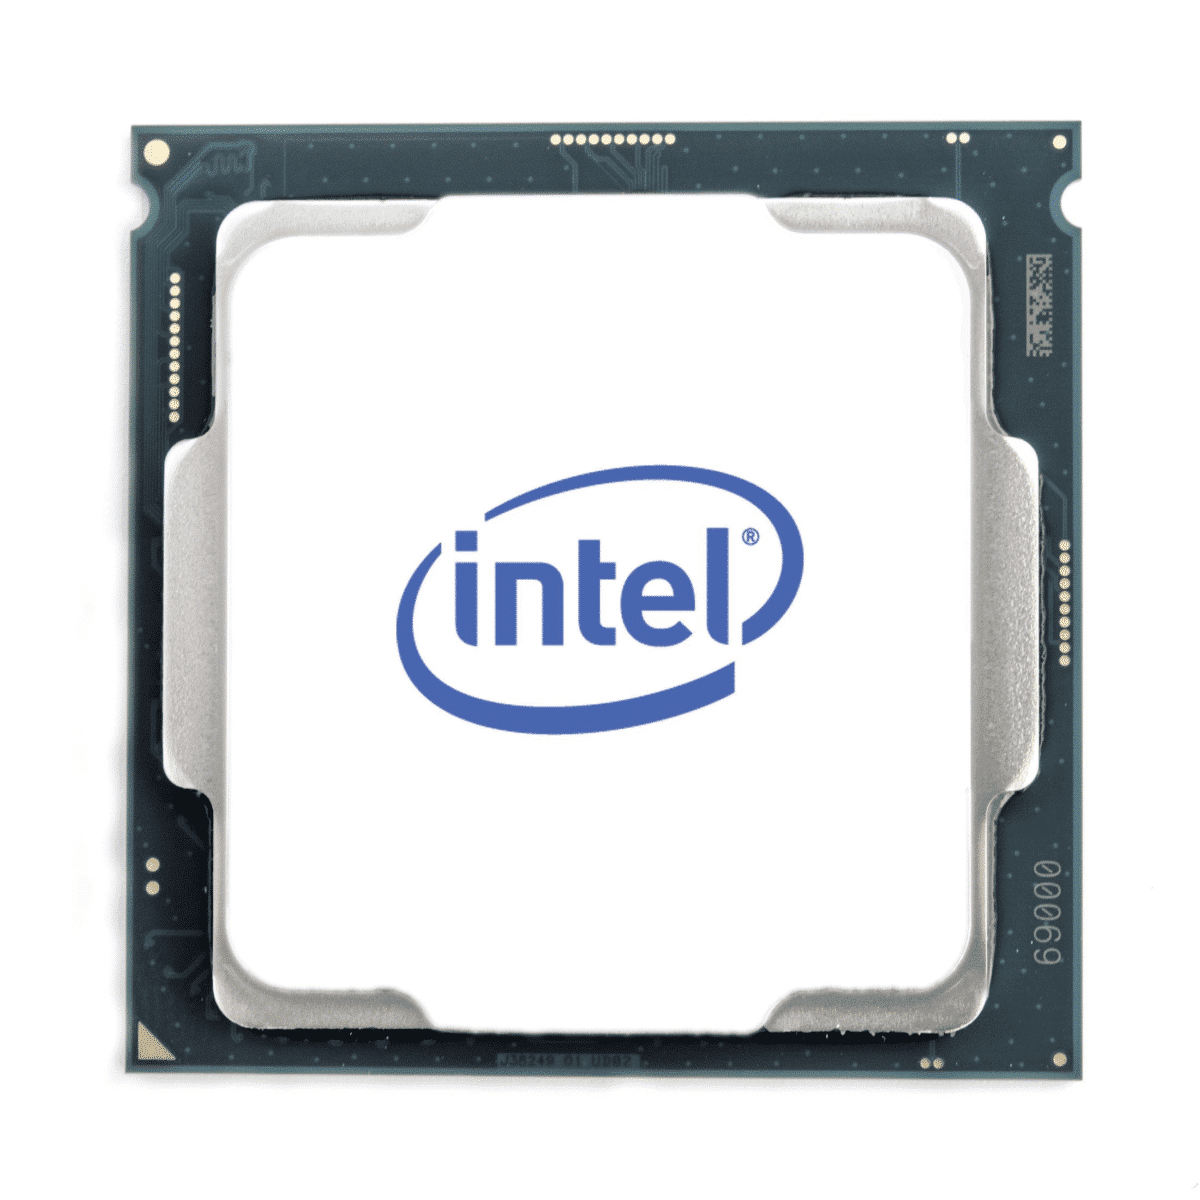 Intel I9 10900K CPU - 10th Gen Core i9-10900K 10-core LGA 1200 (Socket H5) 3.7GHz Processor BX8070110900K